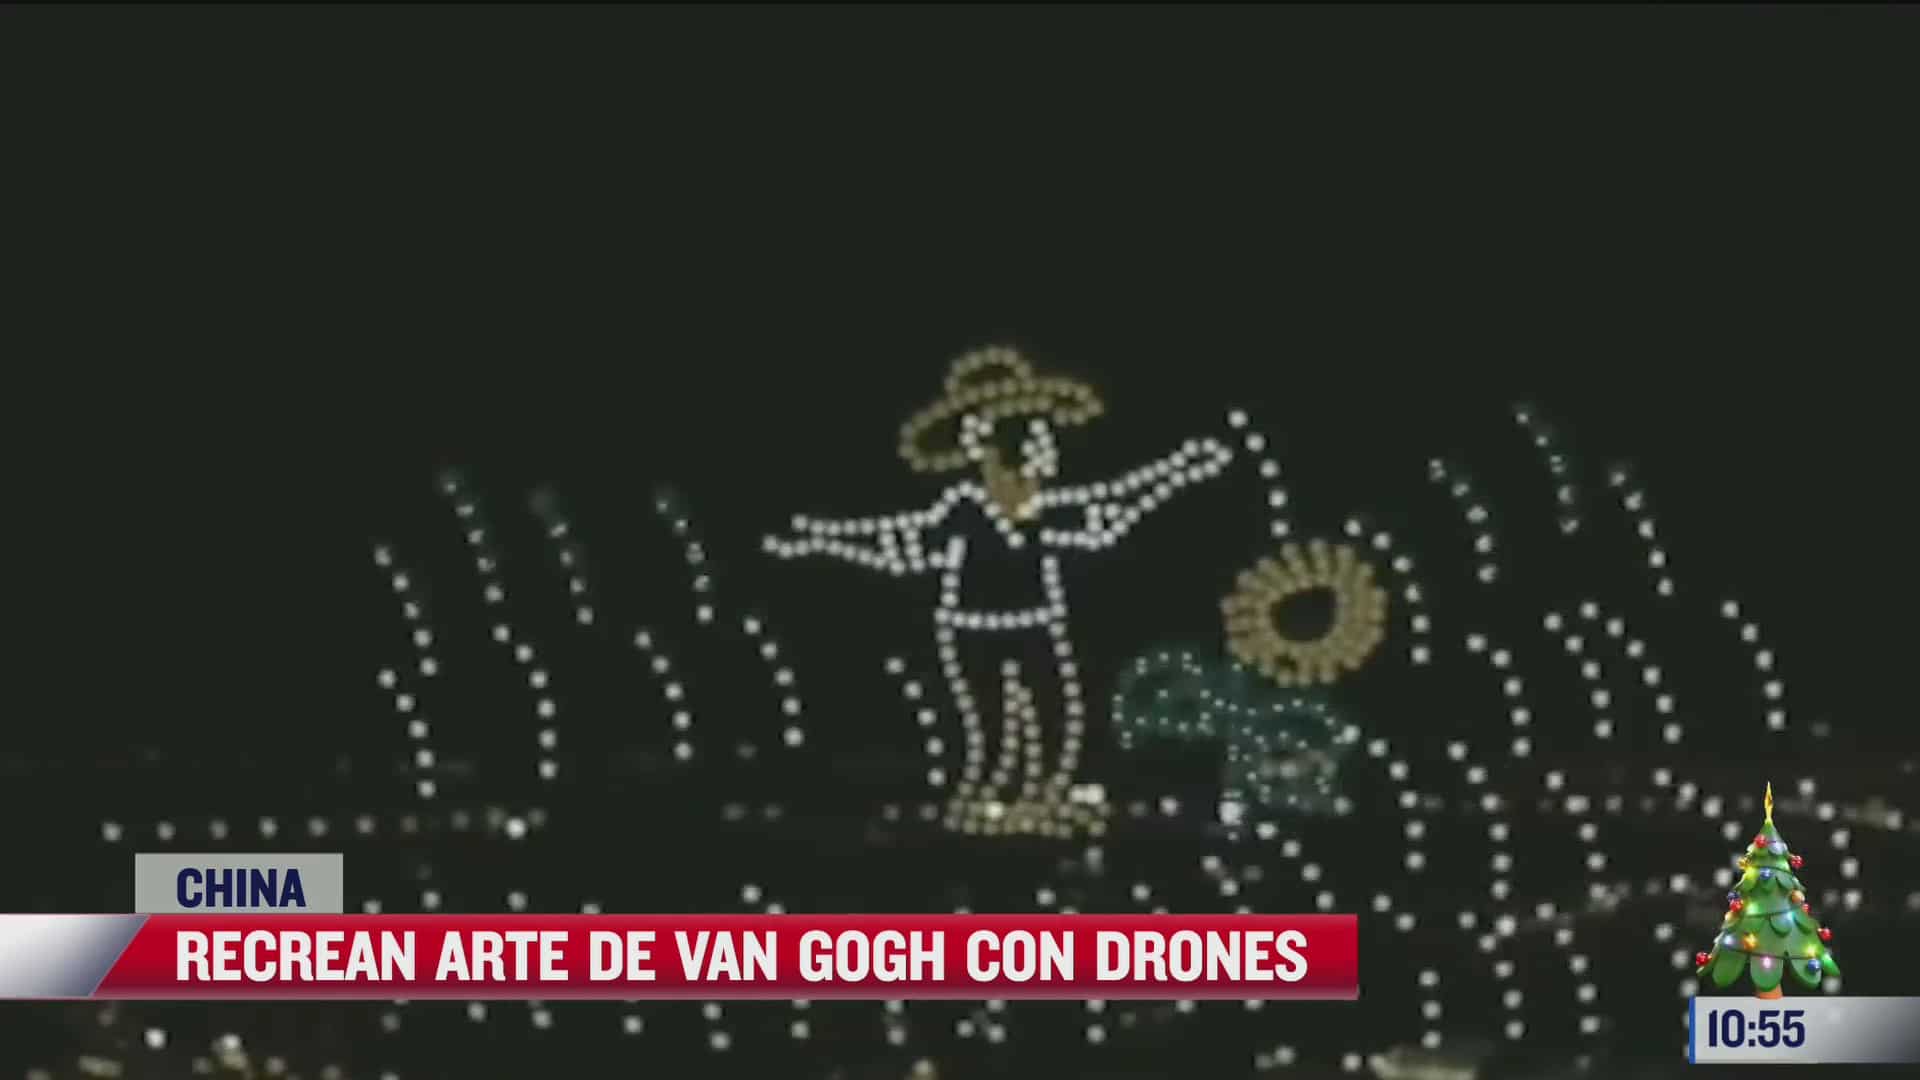 realizan espectacular homenaje a van gogh usando drones en china